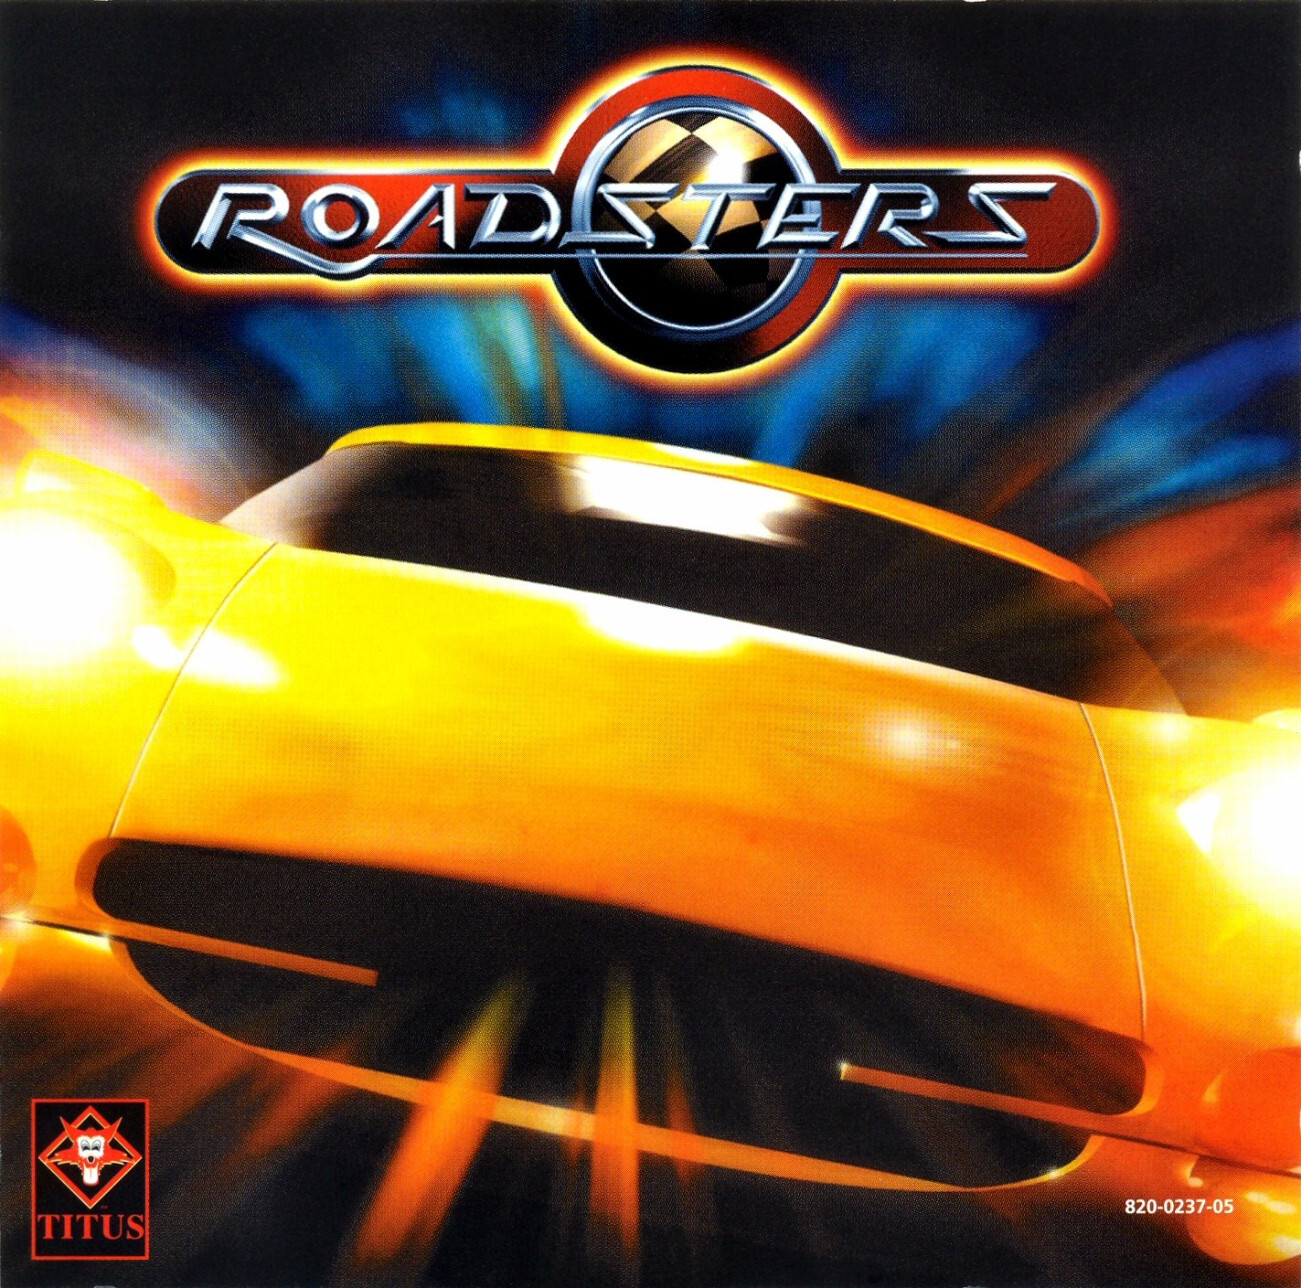 Titus roadsters Dreamcast